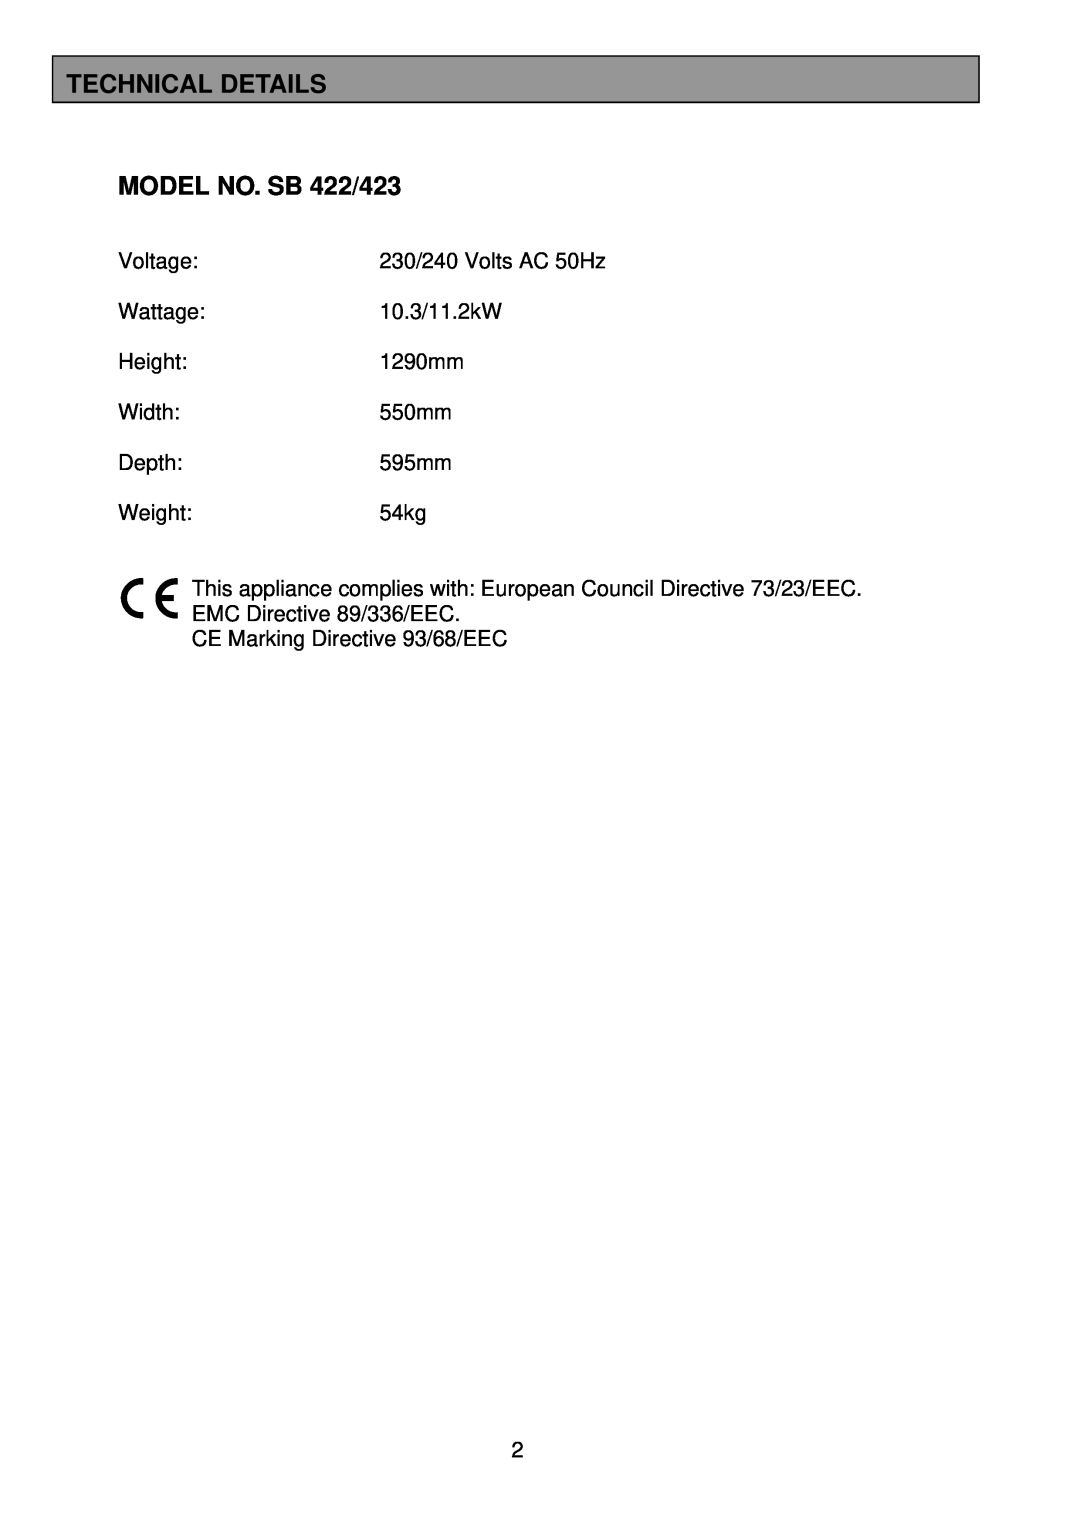 Tricity Bendix Technical Details, MODEL NO. SB 422/423, Voltage, 230/240 Volts AC 50Hz, CE Marking Directive 93/68/EEC 